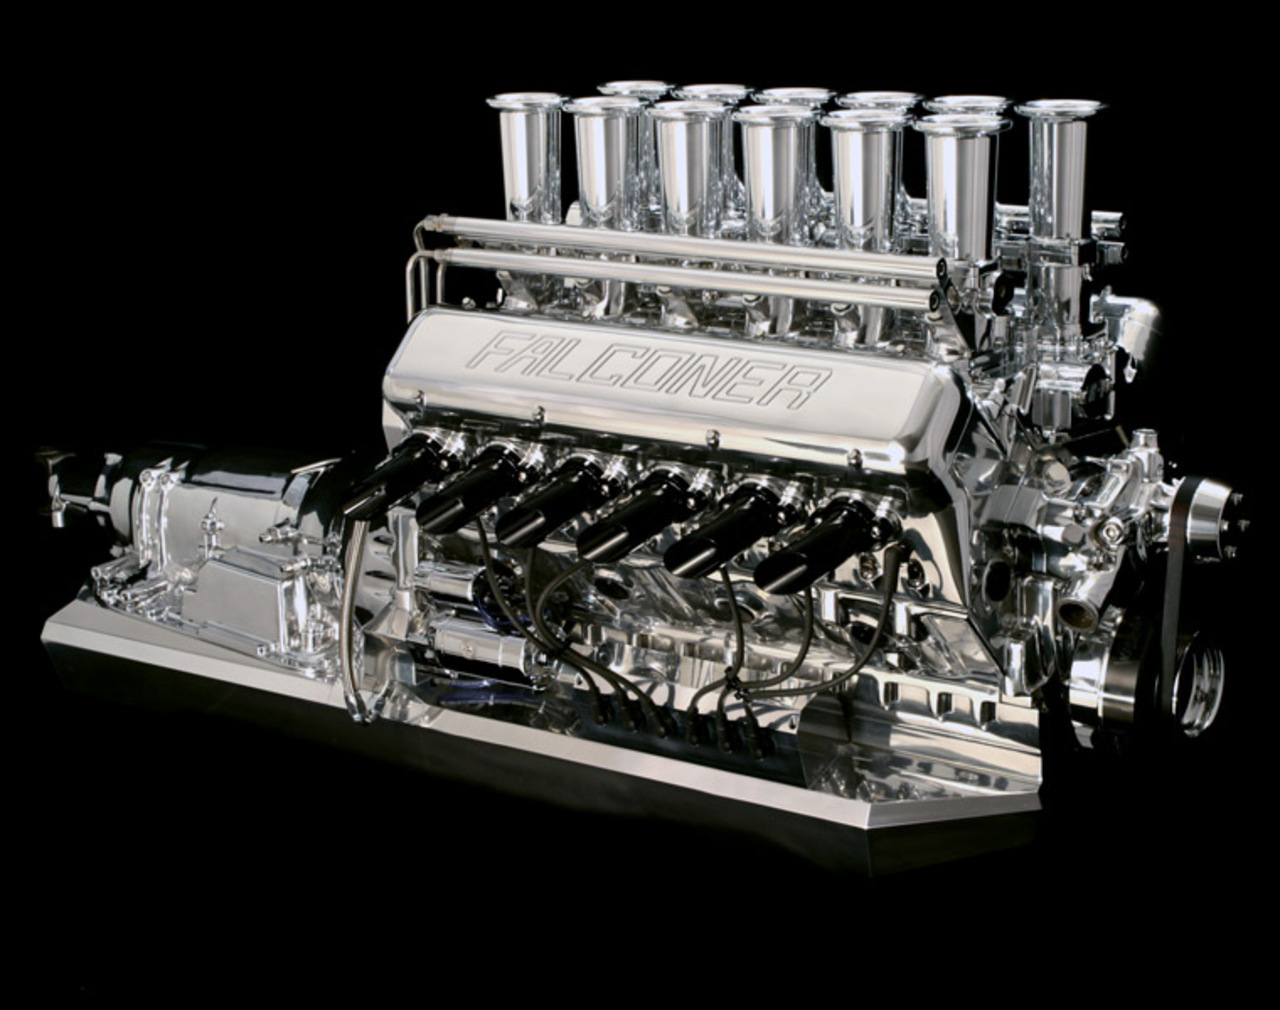 Немецкие двигатели автомобилей. 6 Цилиндровый v12. Рядный 8 цилиндровый двигатель Форд. Мотор v12 Титан. Ford v12.